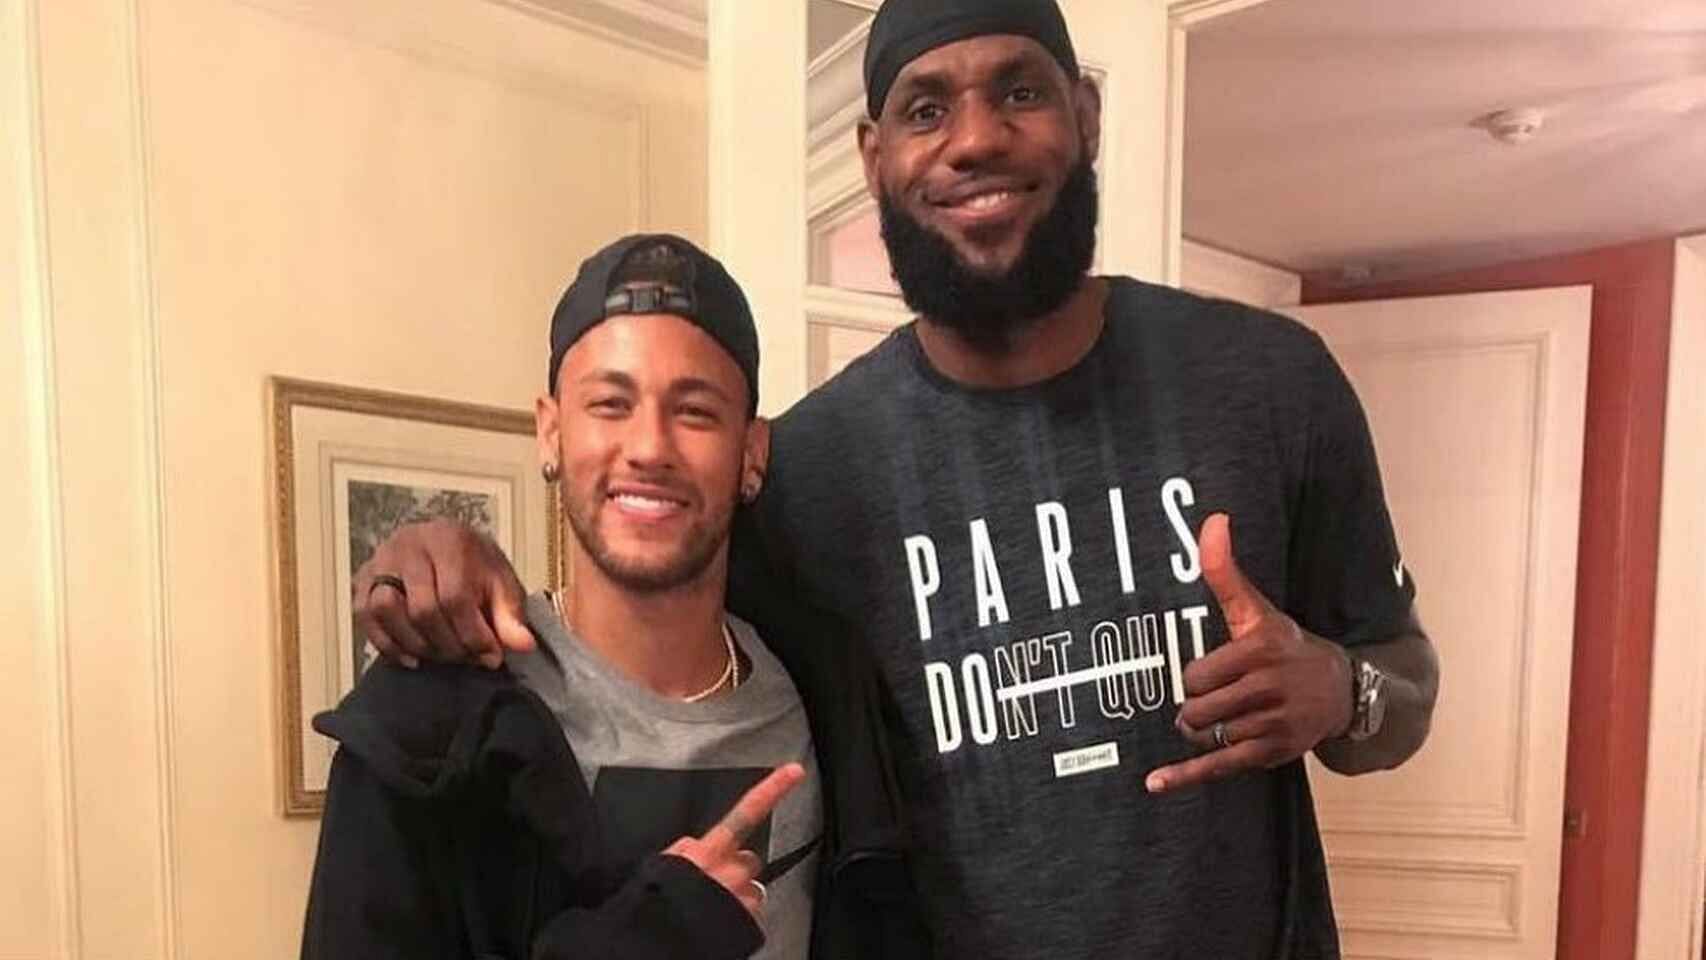 Neymar Jr. and LeBron James. (Photo: Courtesy of @neymarjr/Instagram) Enter captionEnter caption